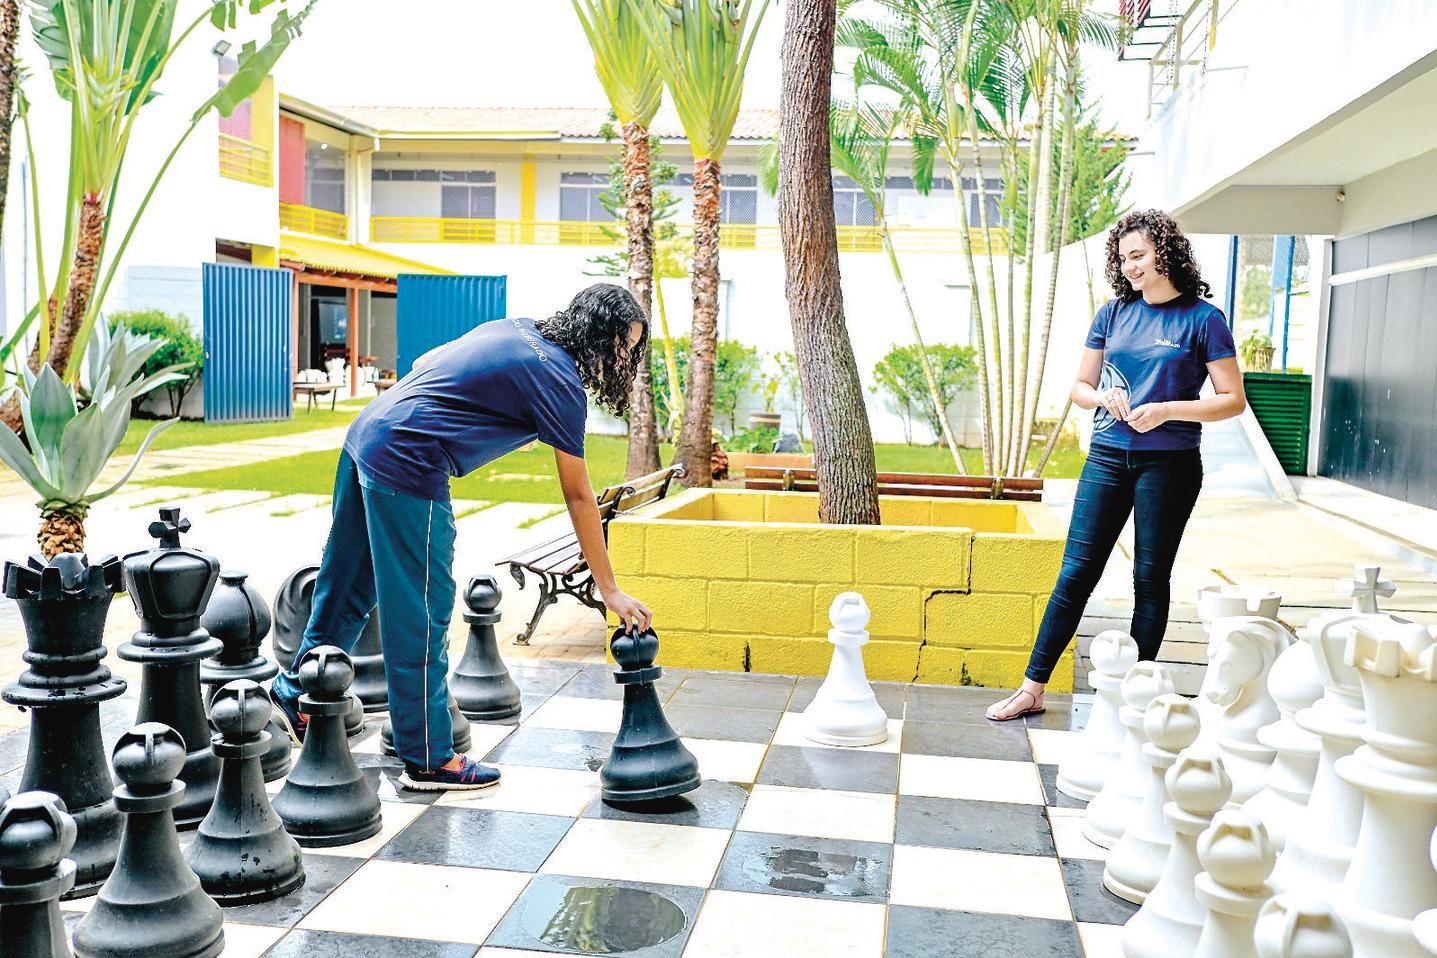 Campeonato traz mestres do xadrez, como Matsuura e Mequinho, a Goiânia